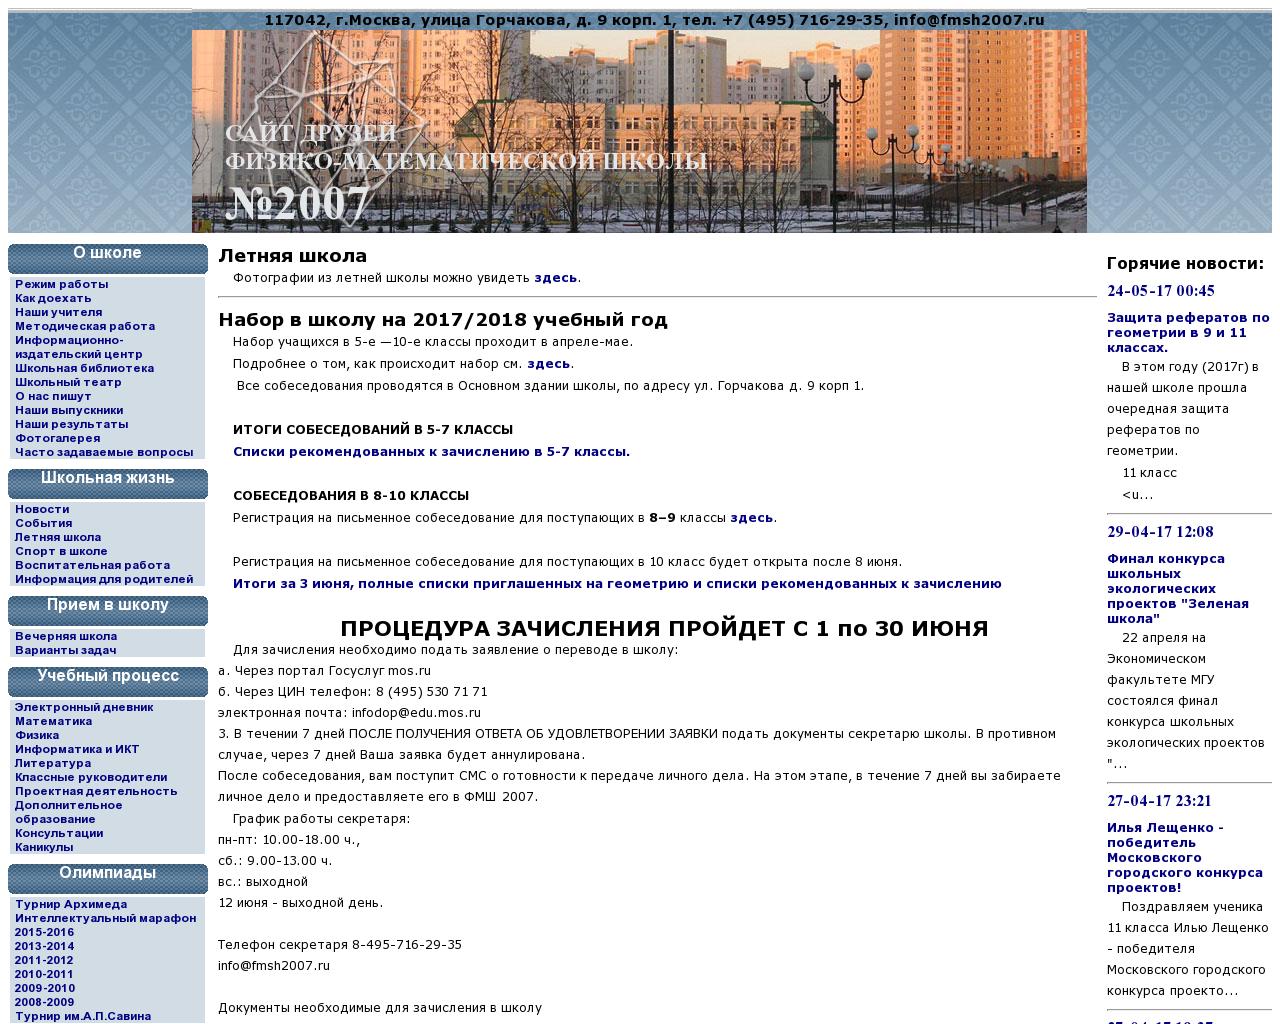 Изображение сайта fmsh2007.ru в разрешении 1280x1024